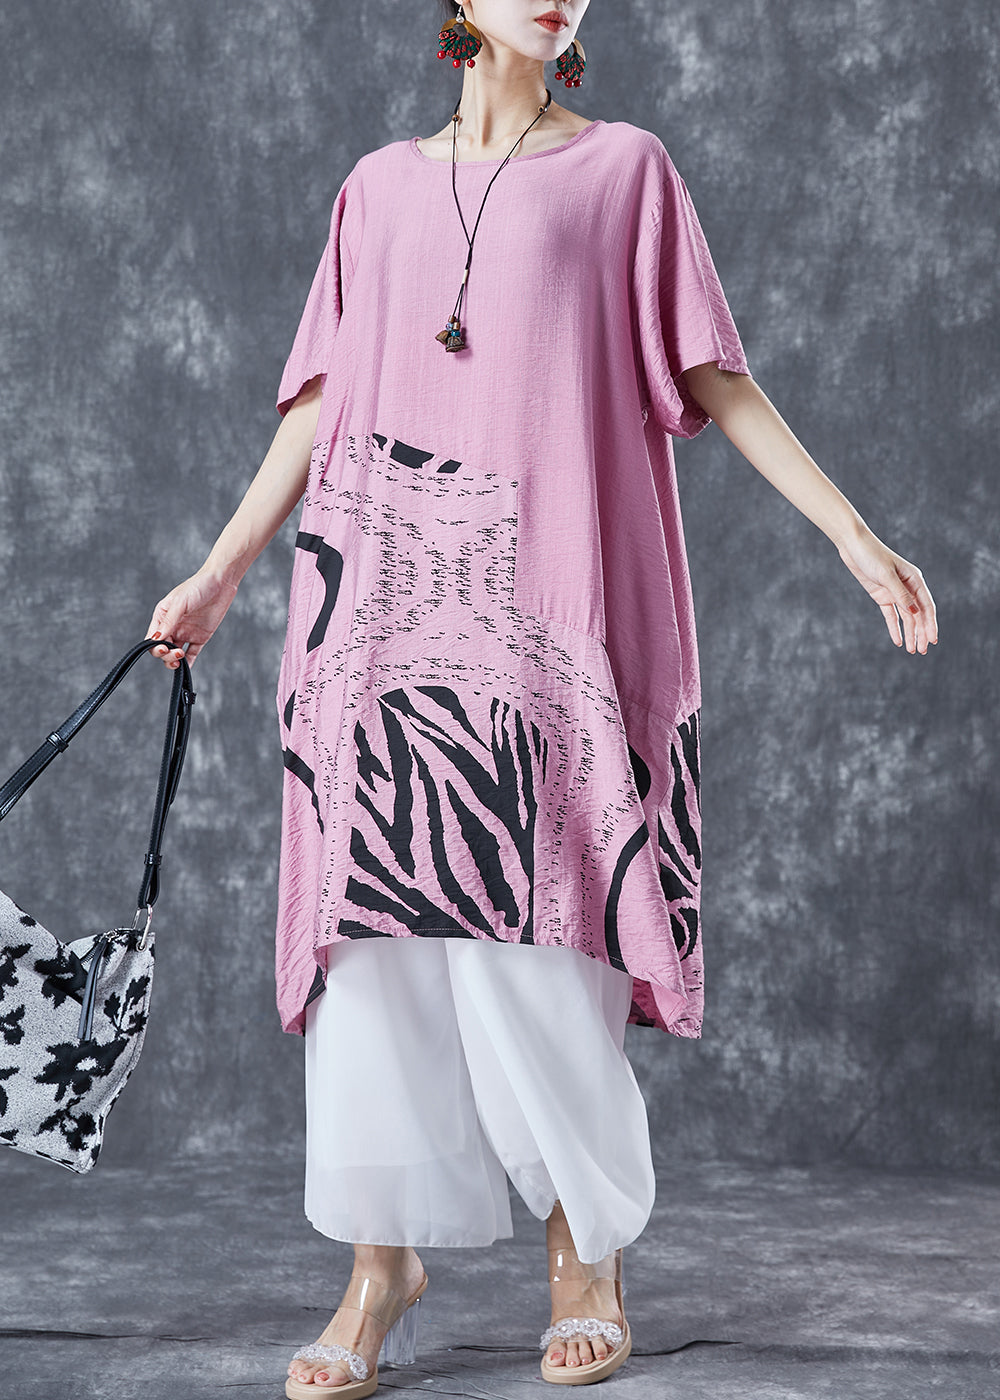 Diy Pink Oversized Print Cotton Maxi Dress Summer LY5674 - fabuloryshop